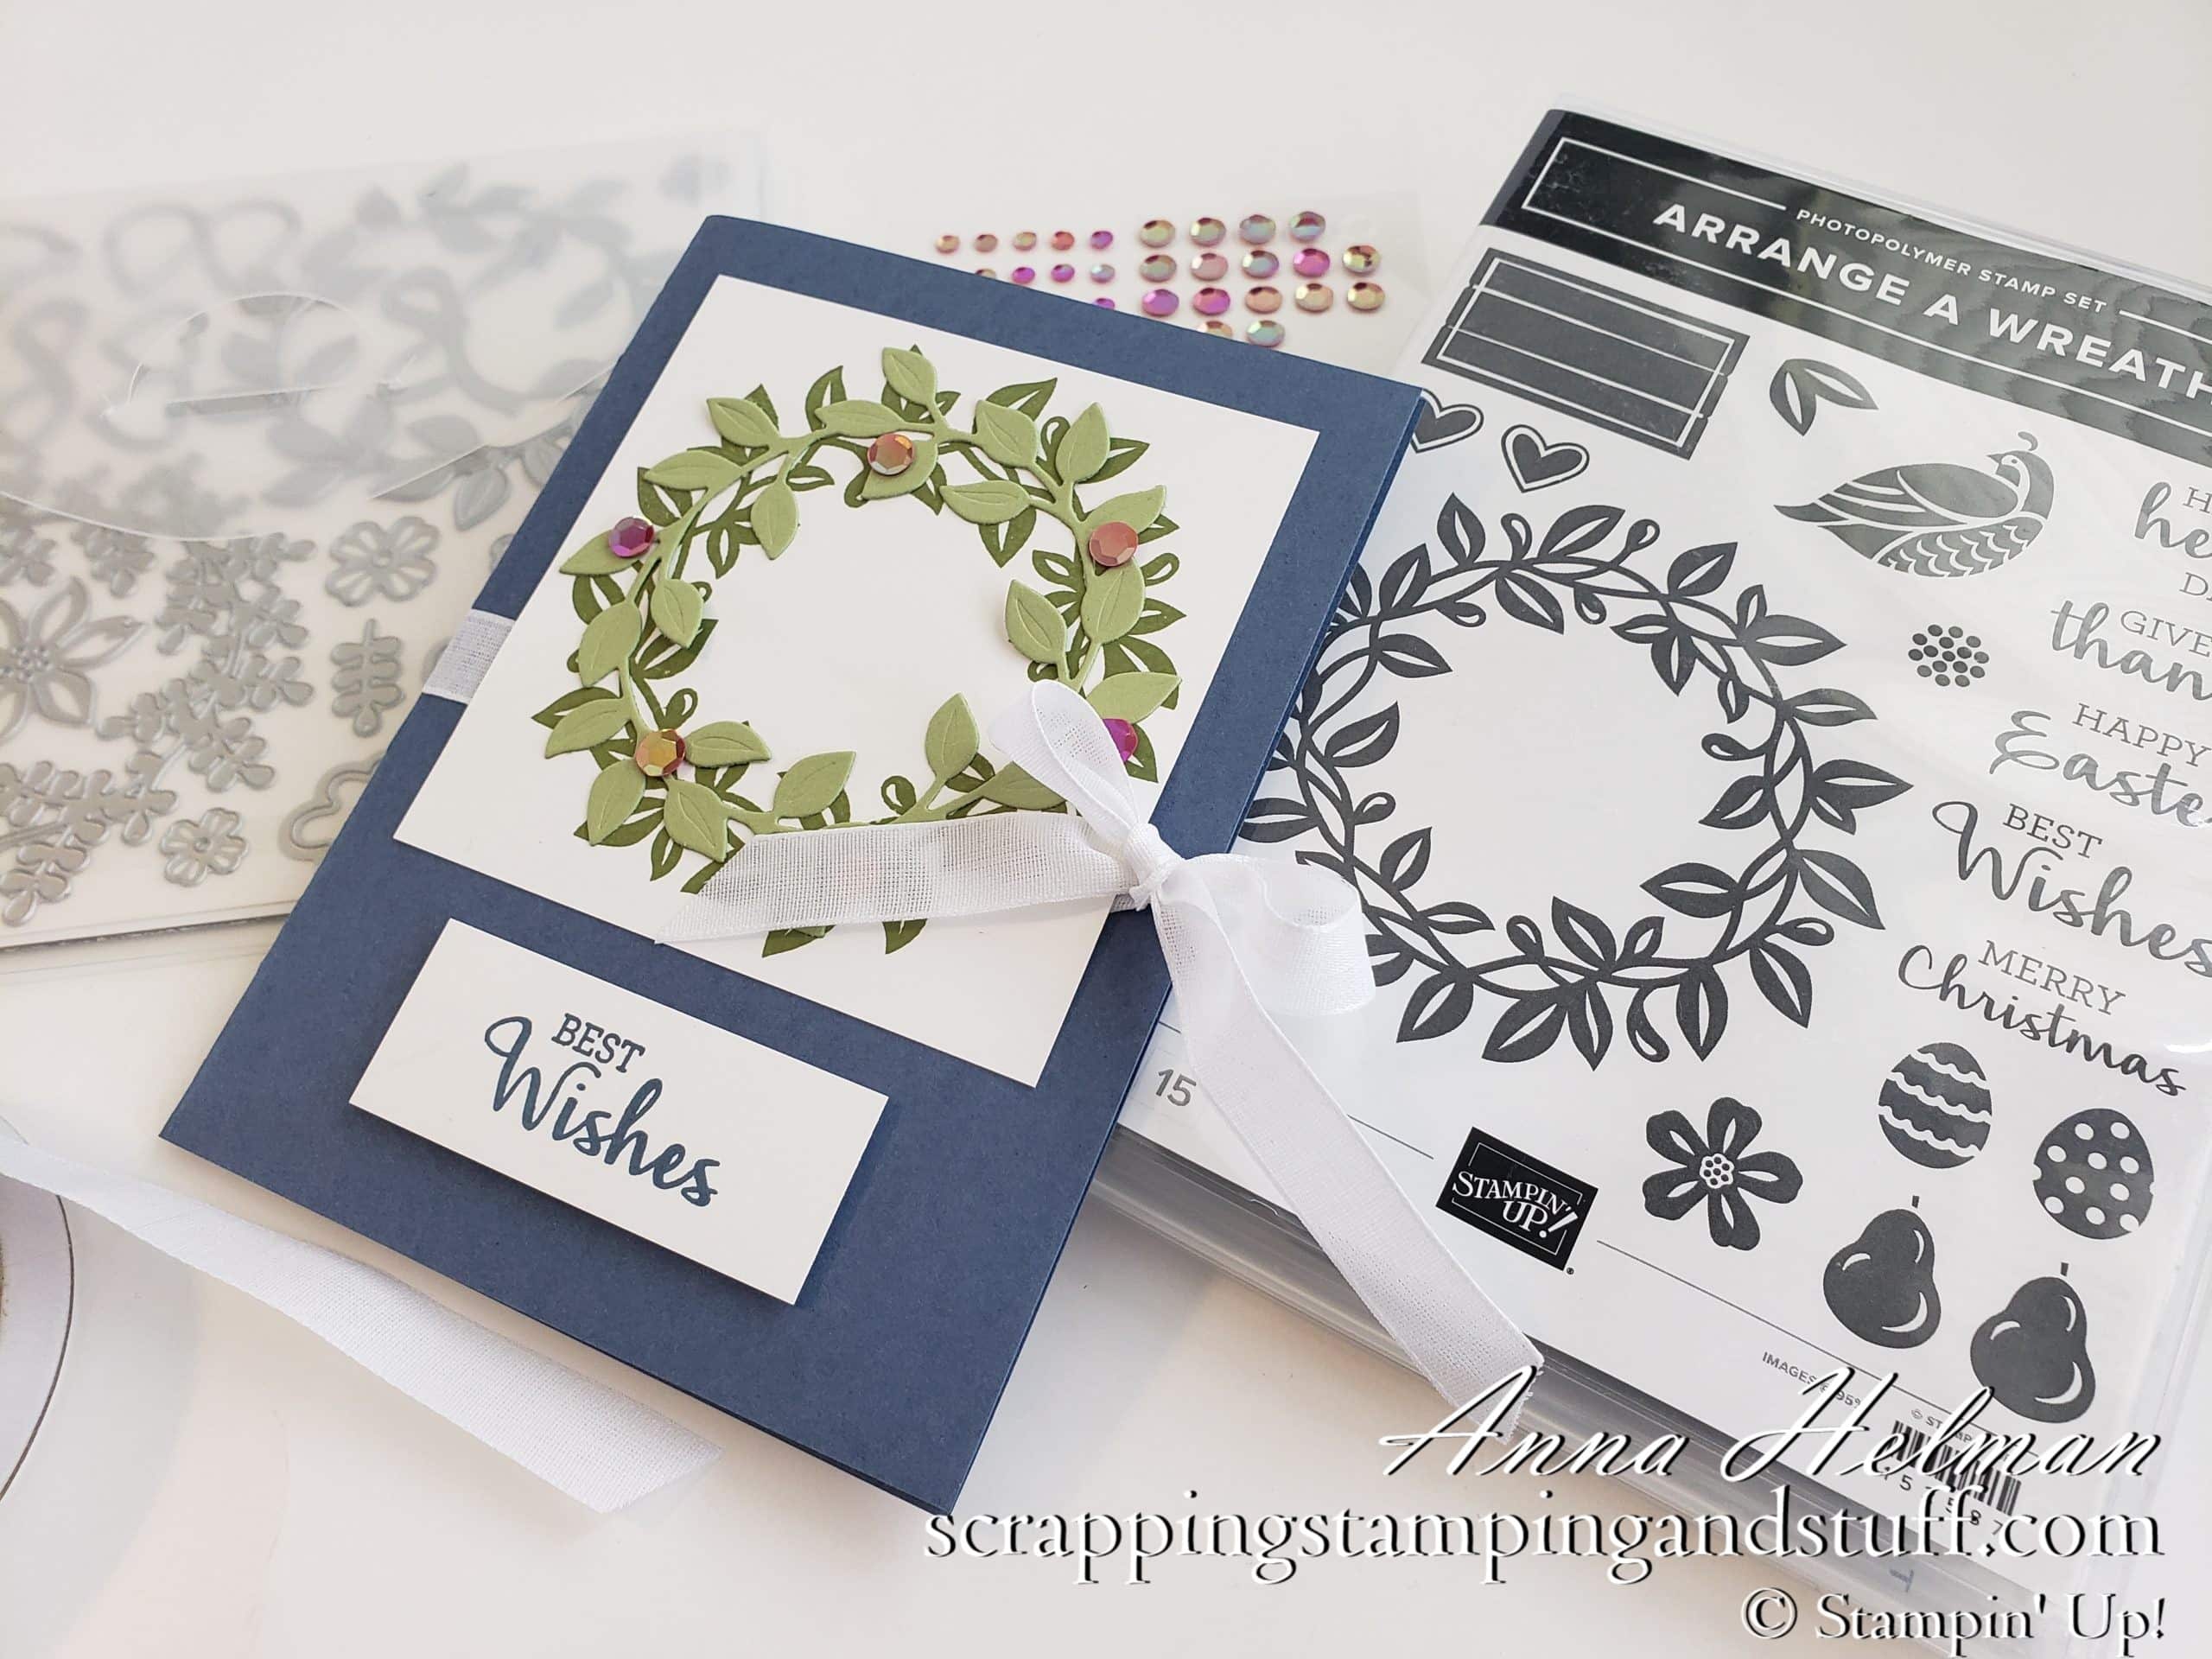 OSAT Blog Hop New Review – Wedding Gift Card Holder